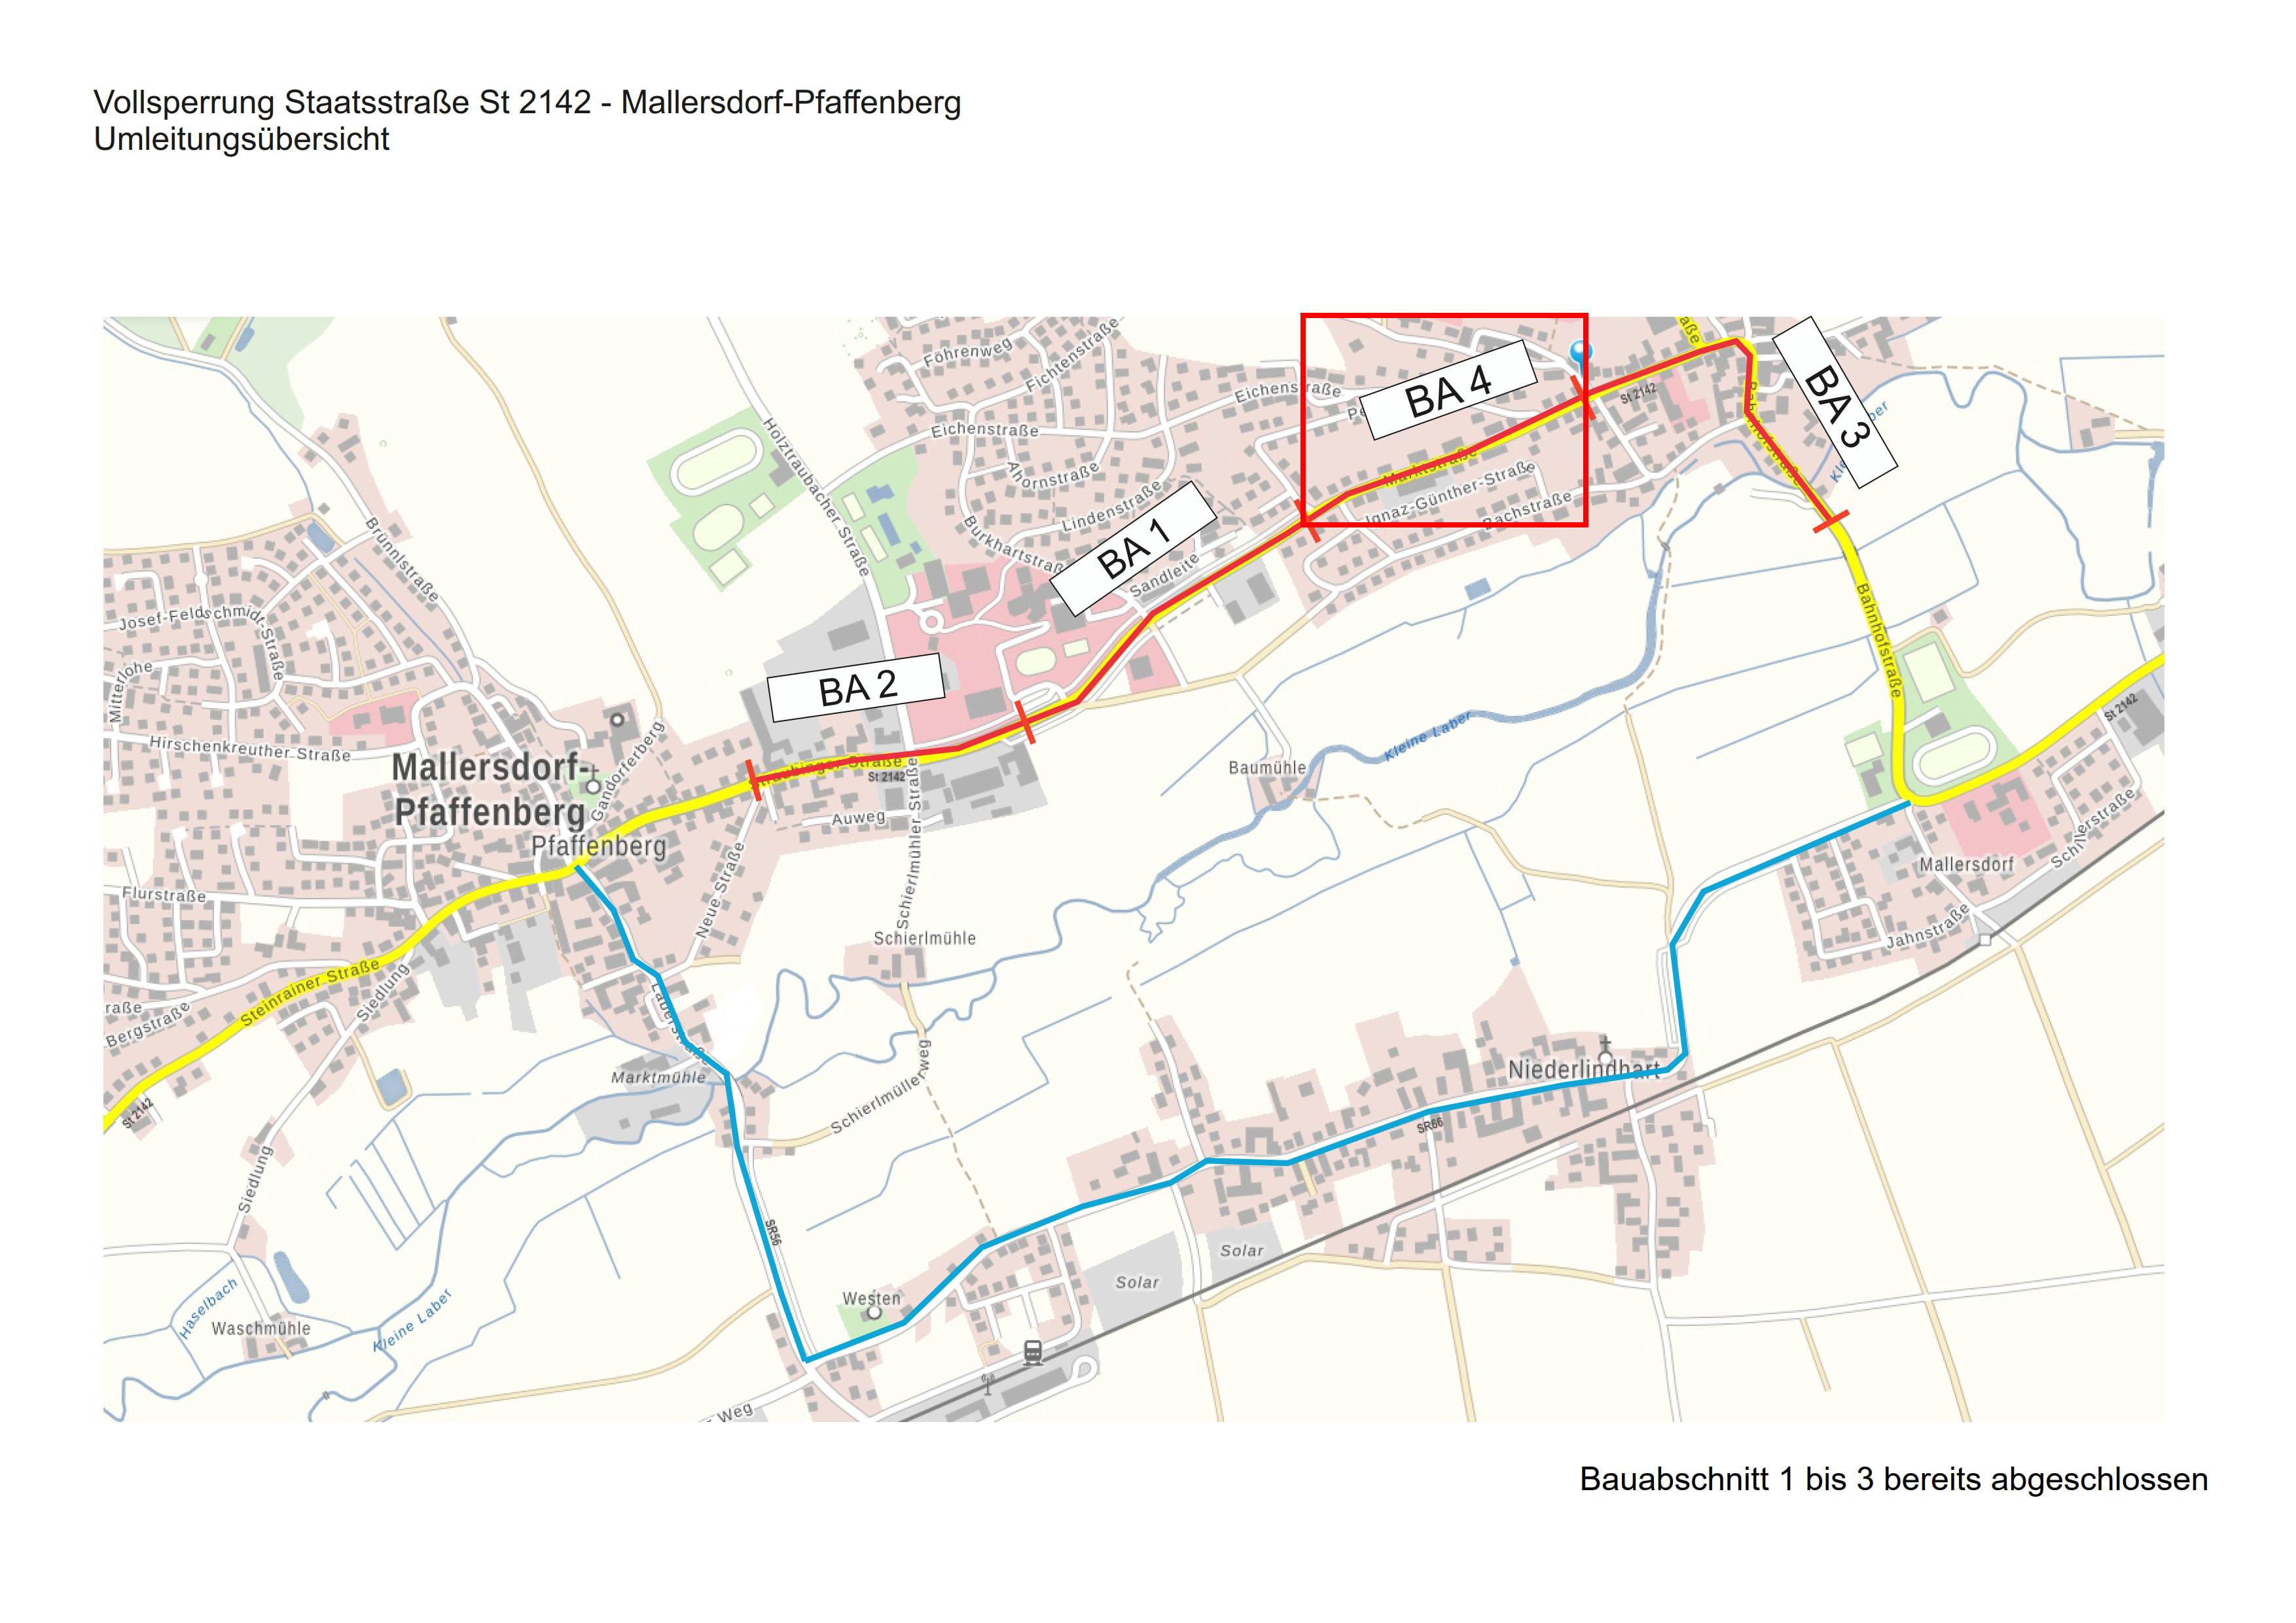 Staatsstraße St 2142 in Mallersdorf-Pfaffenberg gesperrt